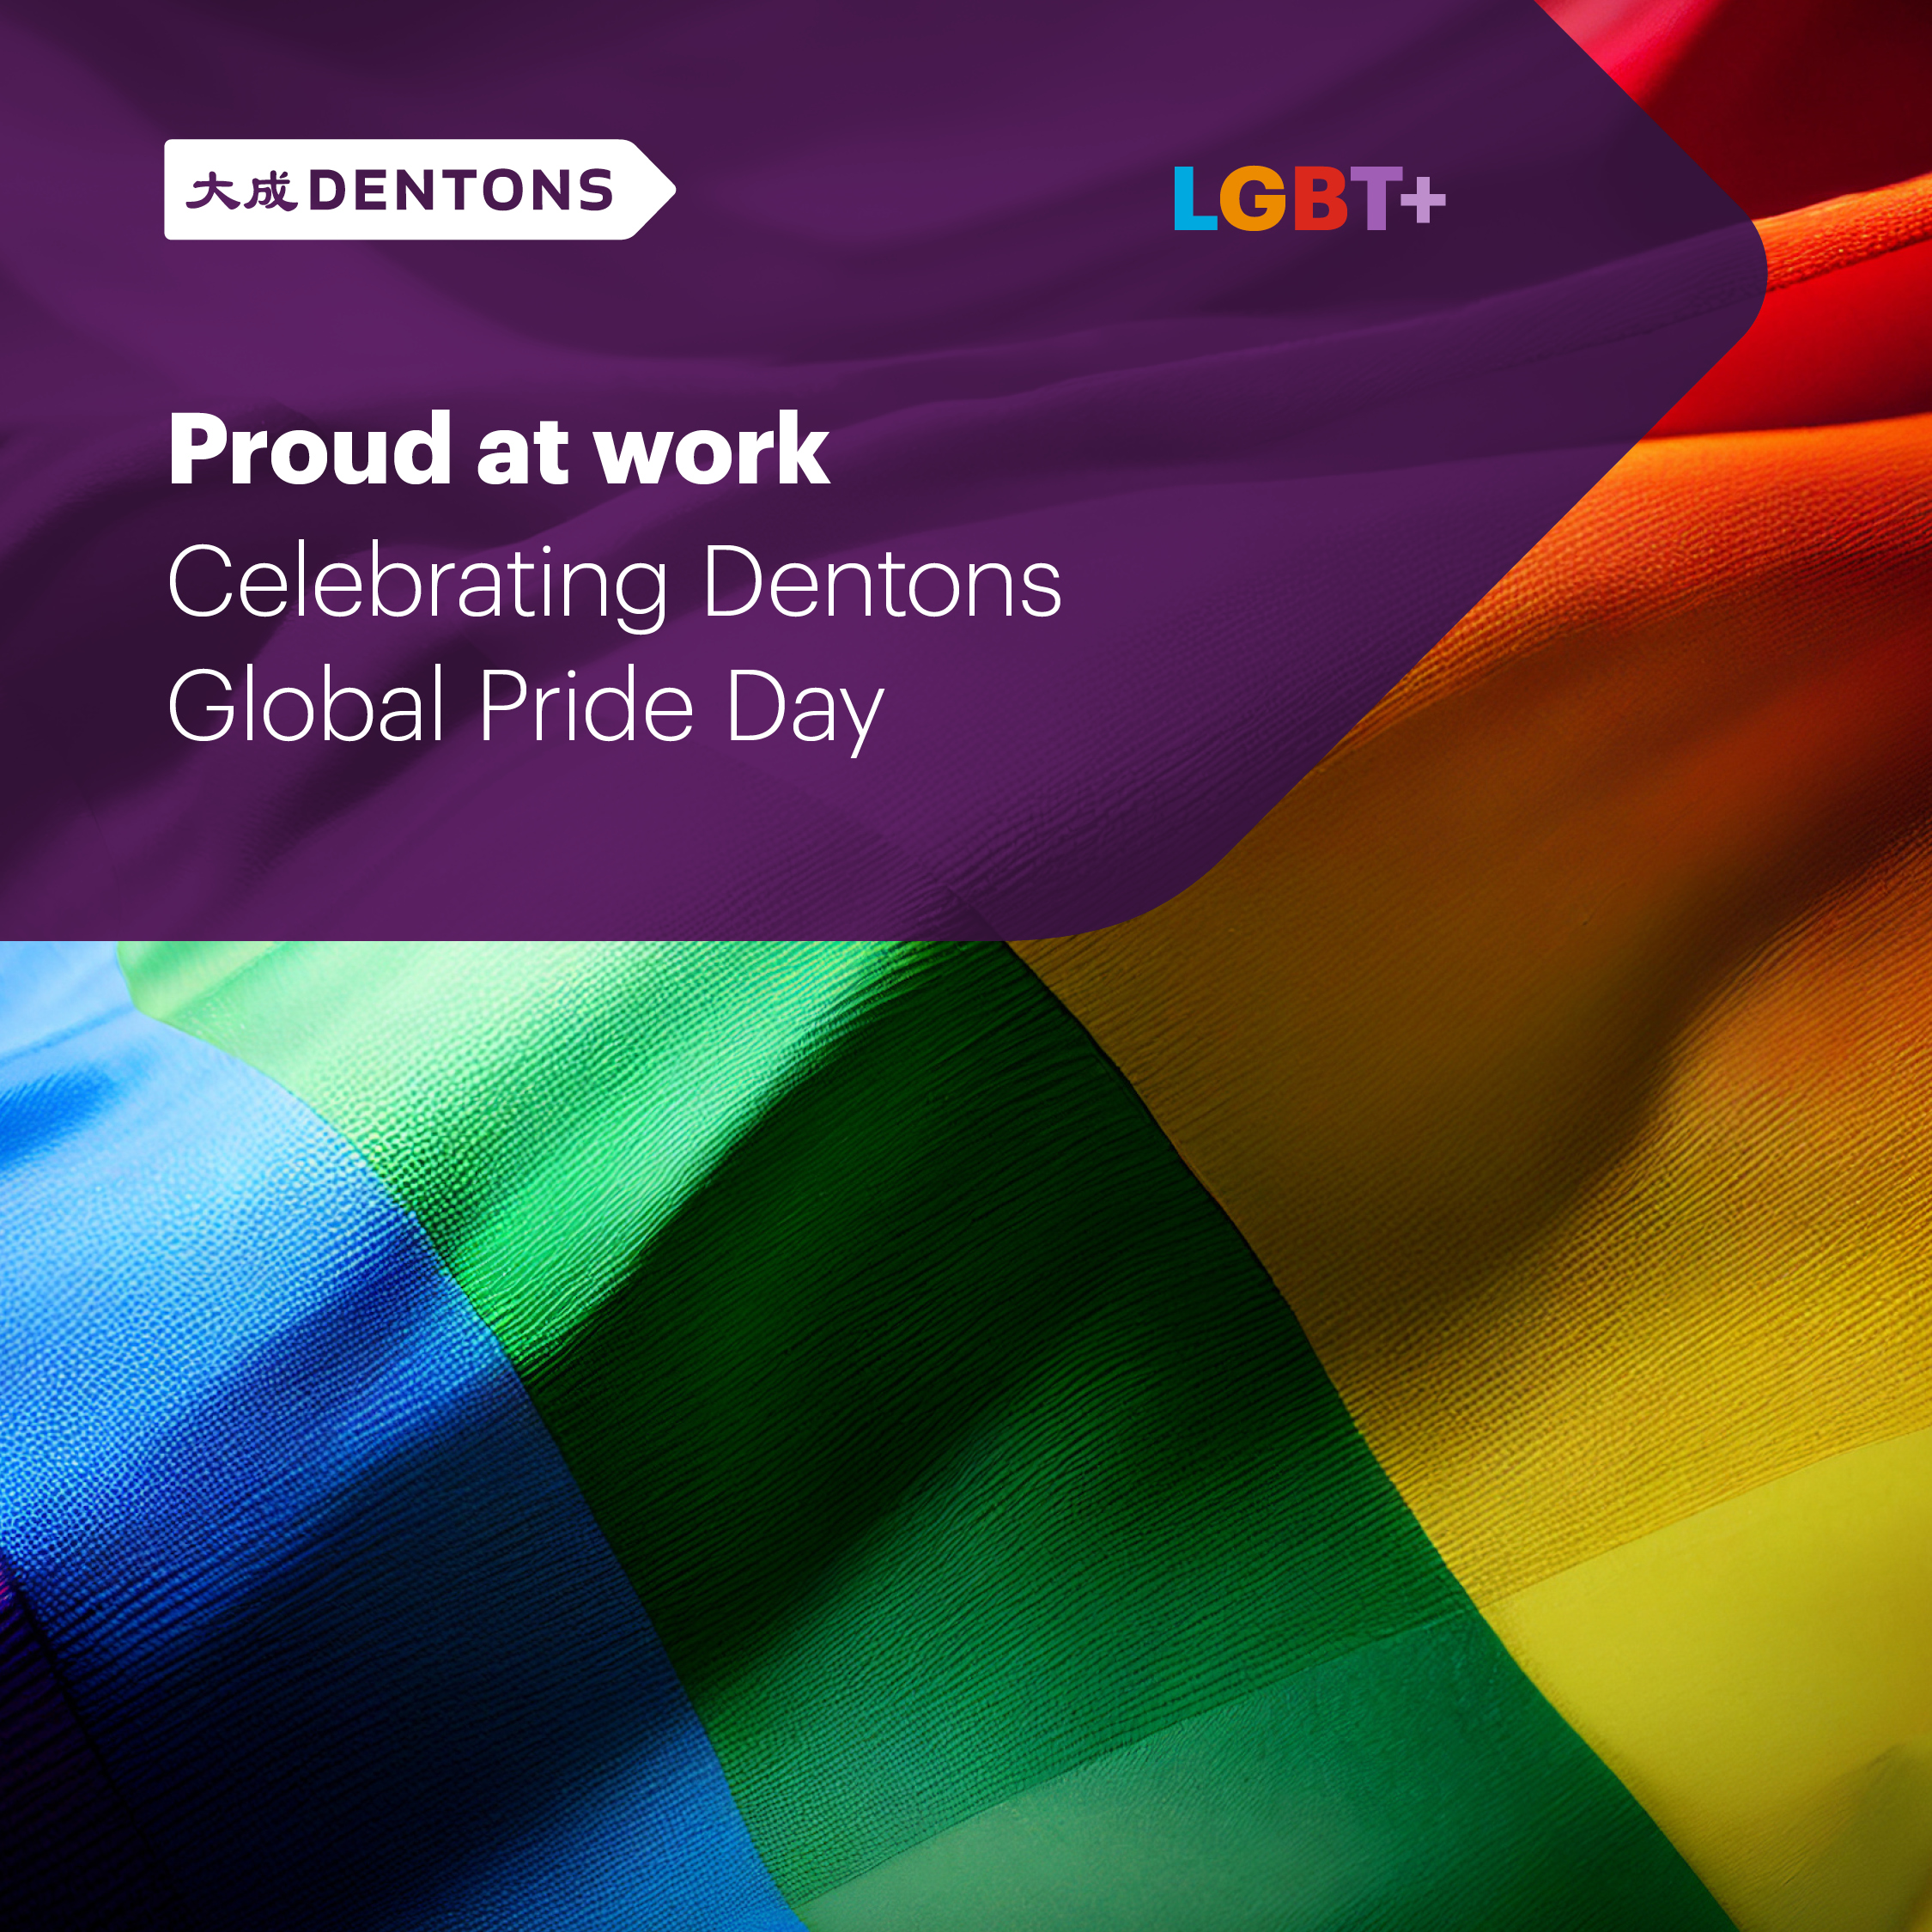 Dentons logo and LGBT flag banner